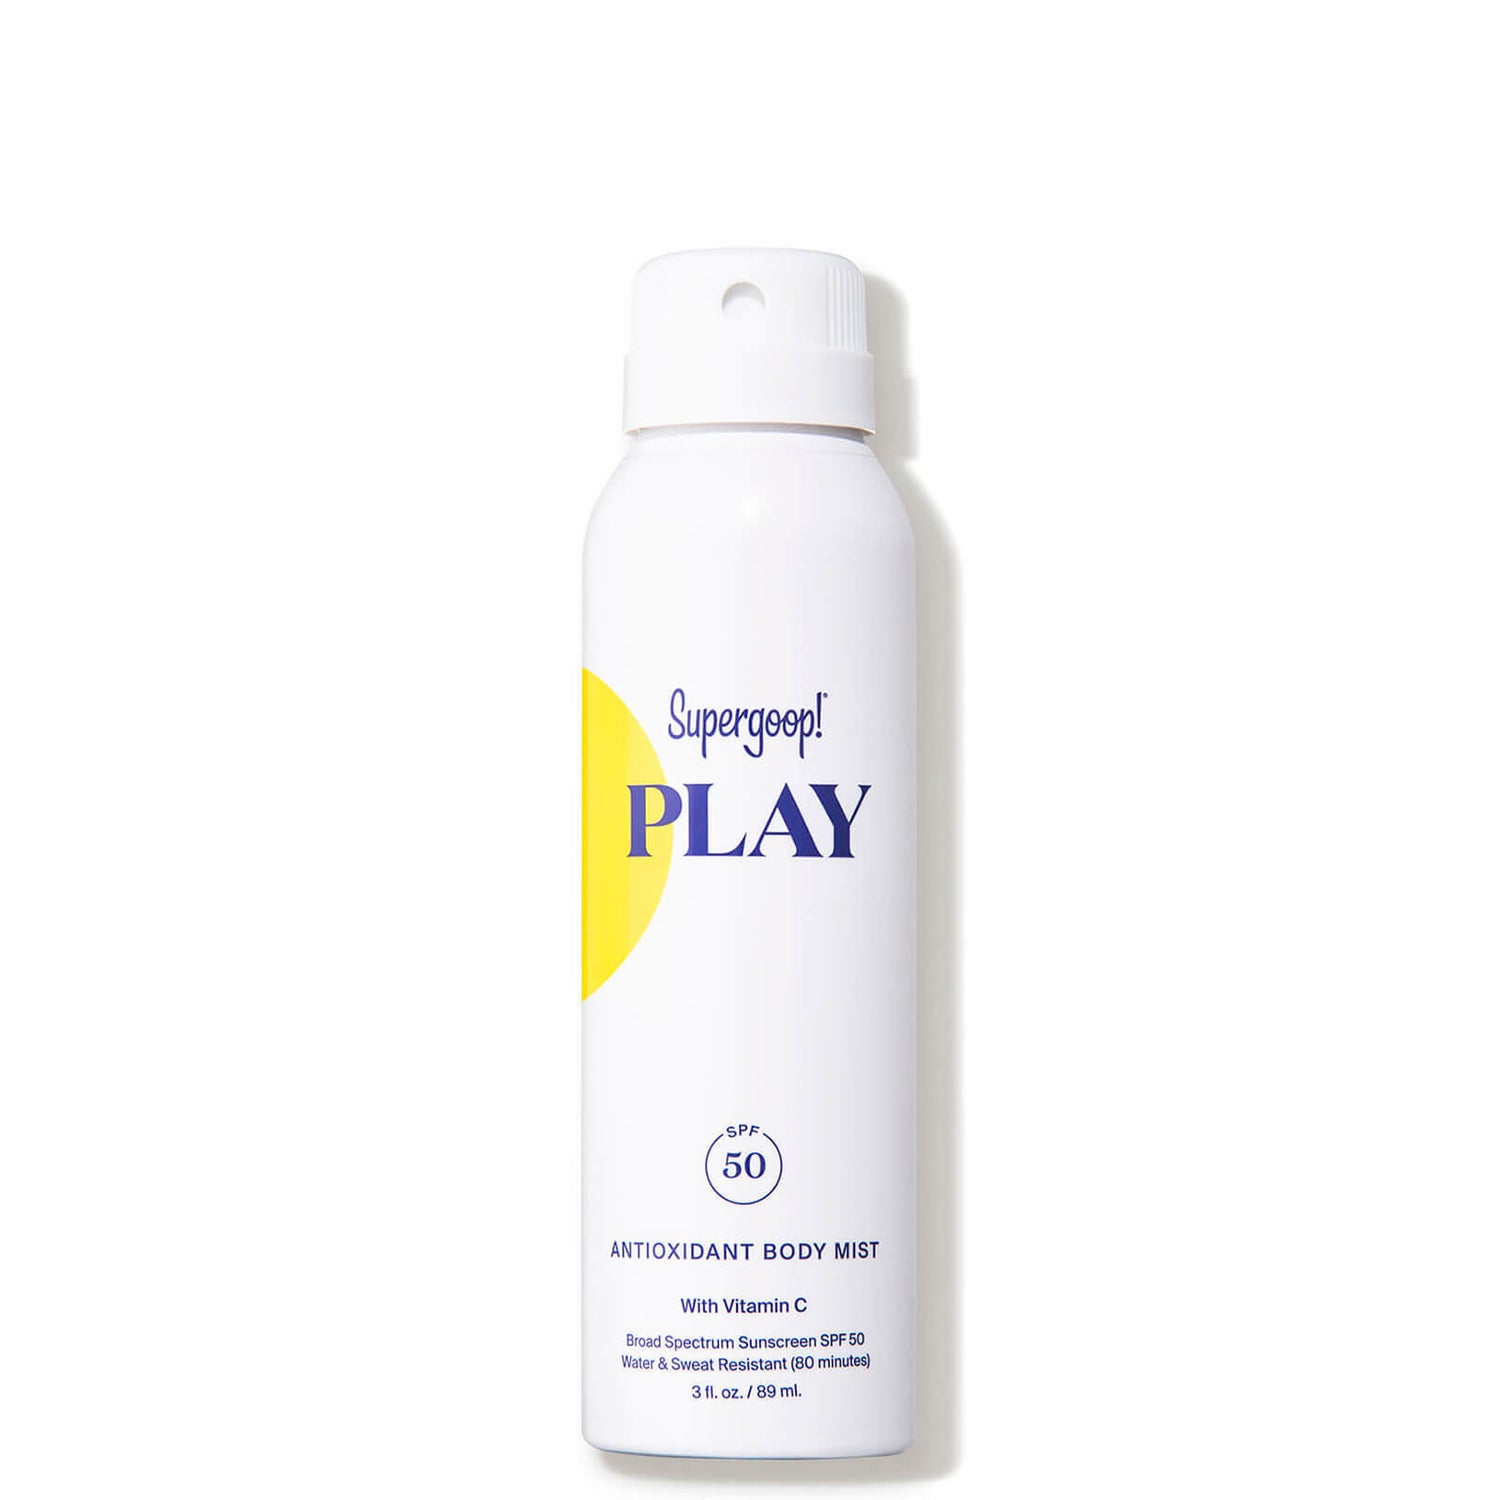 Supergoop!® PLAY Antioxidant Body Mist SPF 50 with Vitamin C 3 fl. oz.